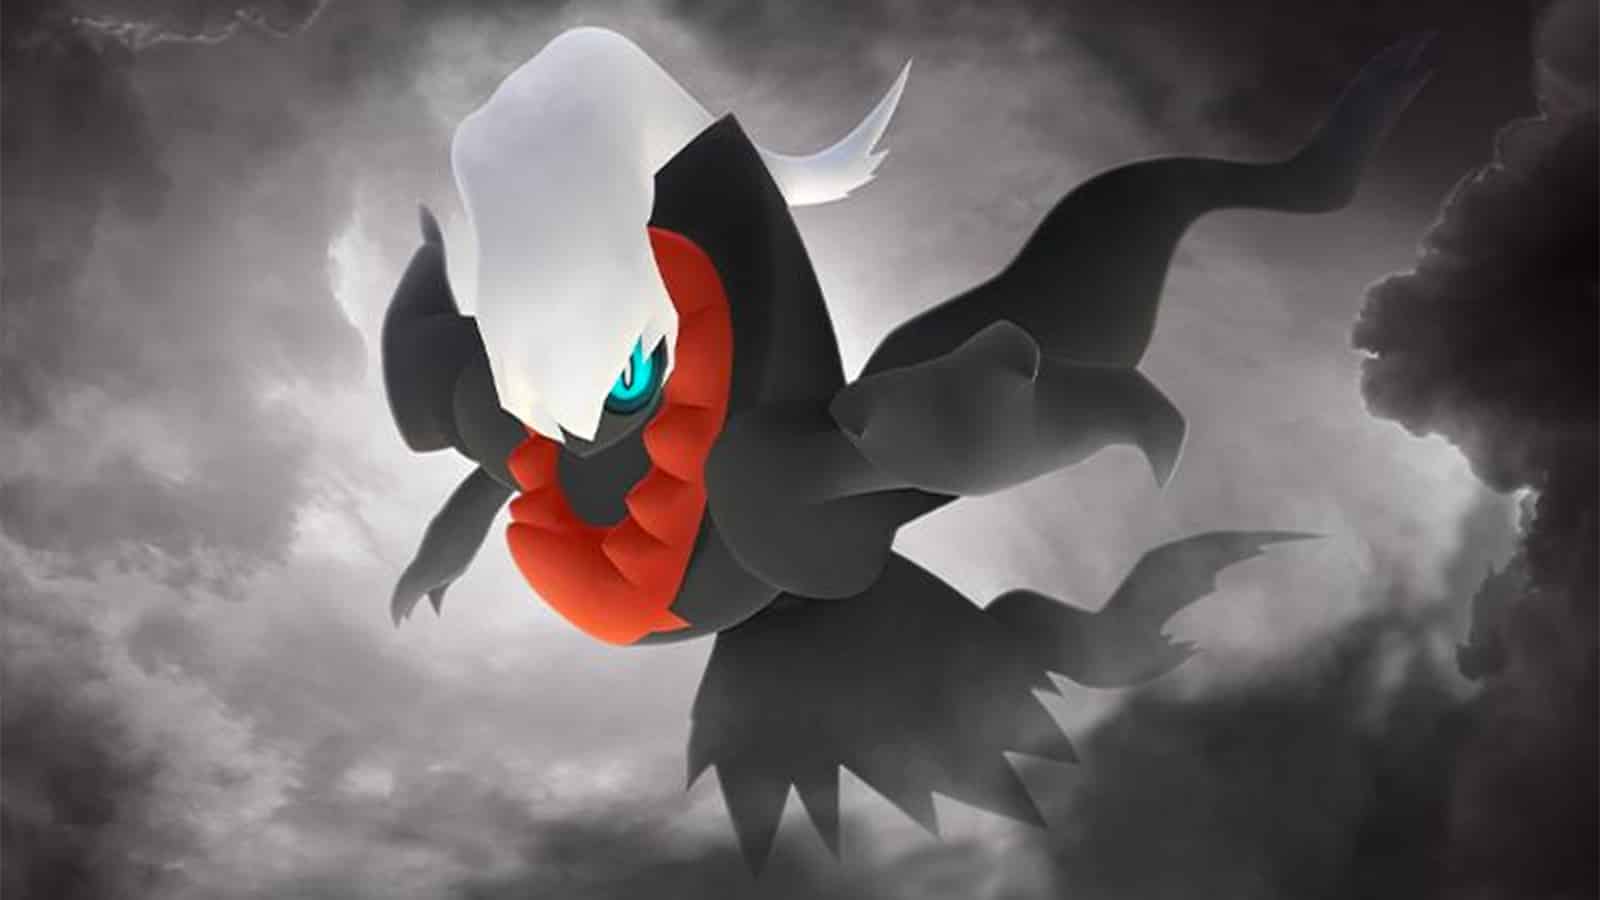 The Mythical Darkrai in Pokemon Go